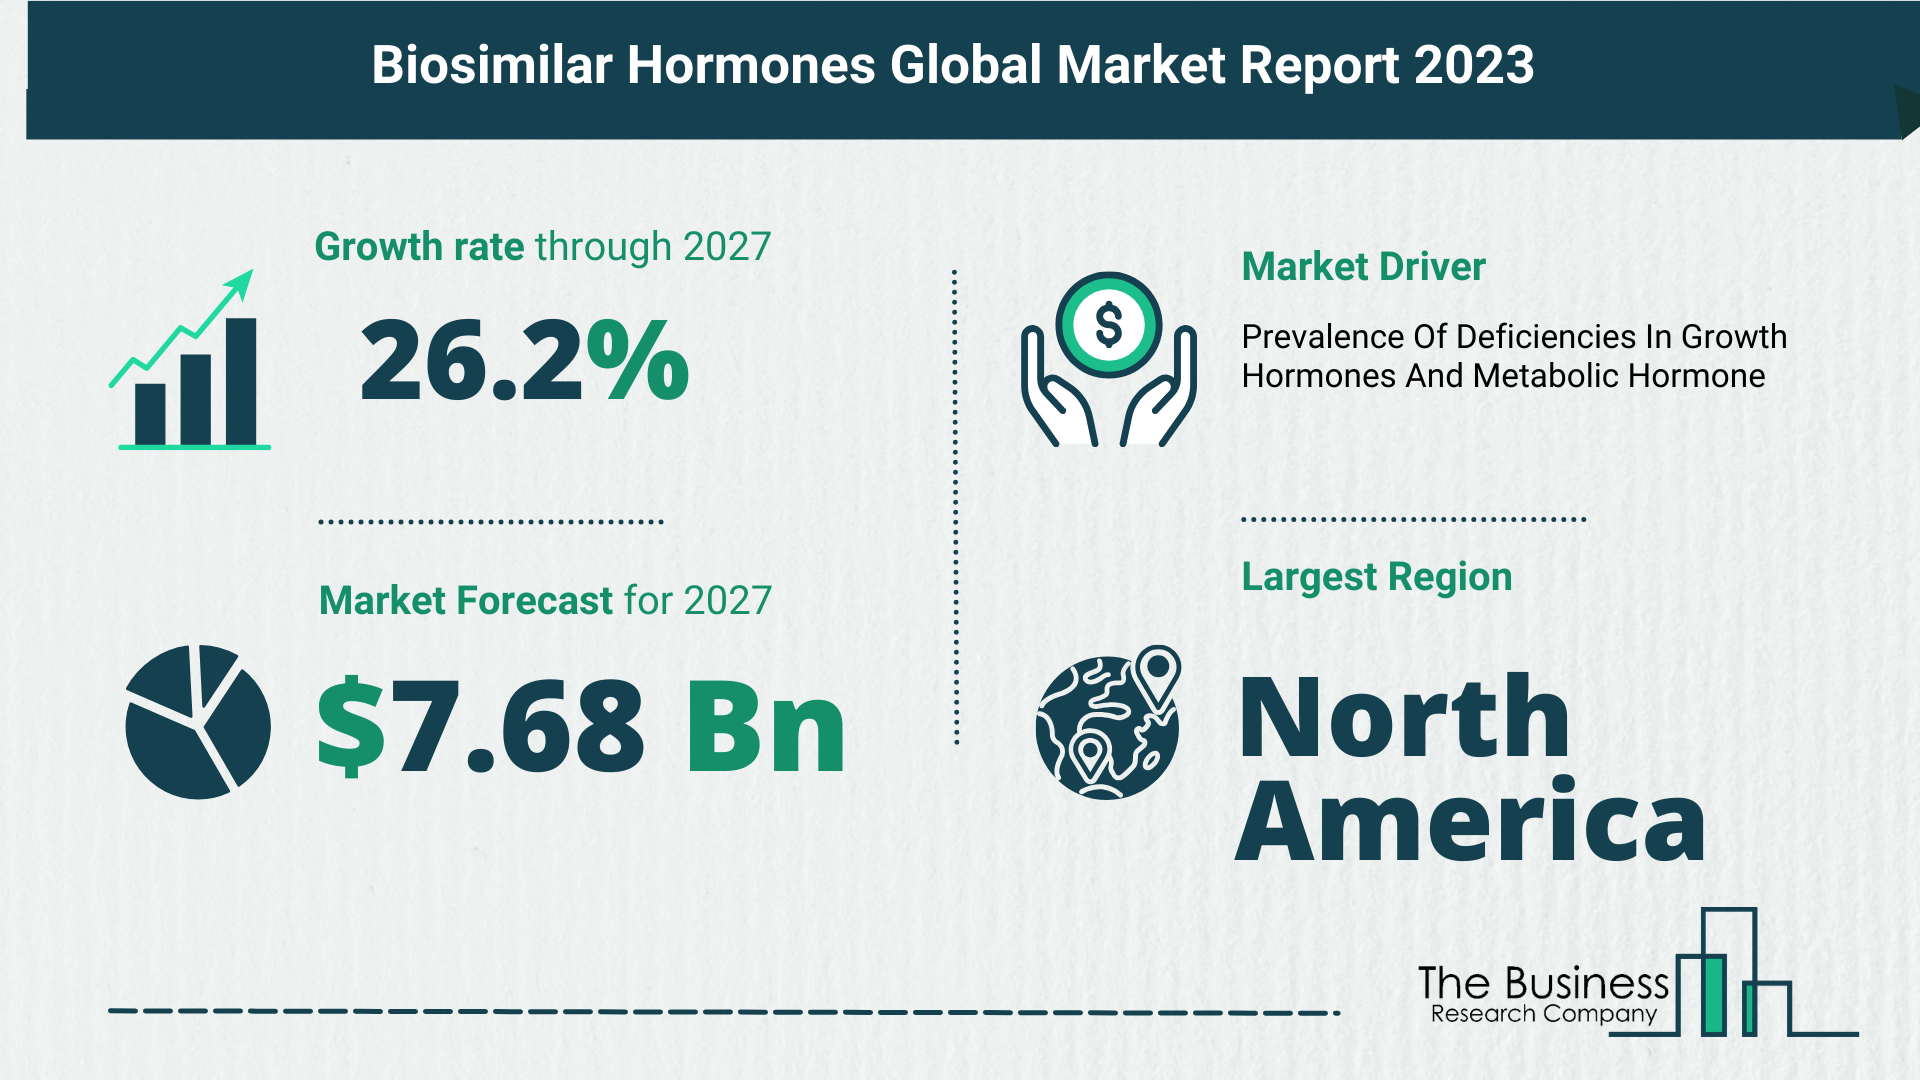 Global Biosimilar Hormones Market